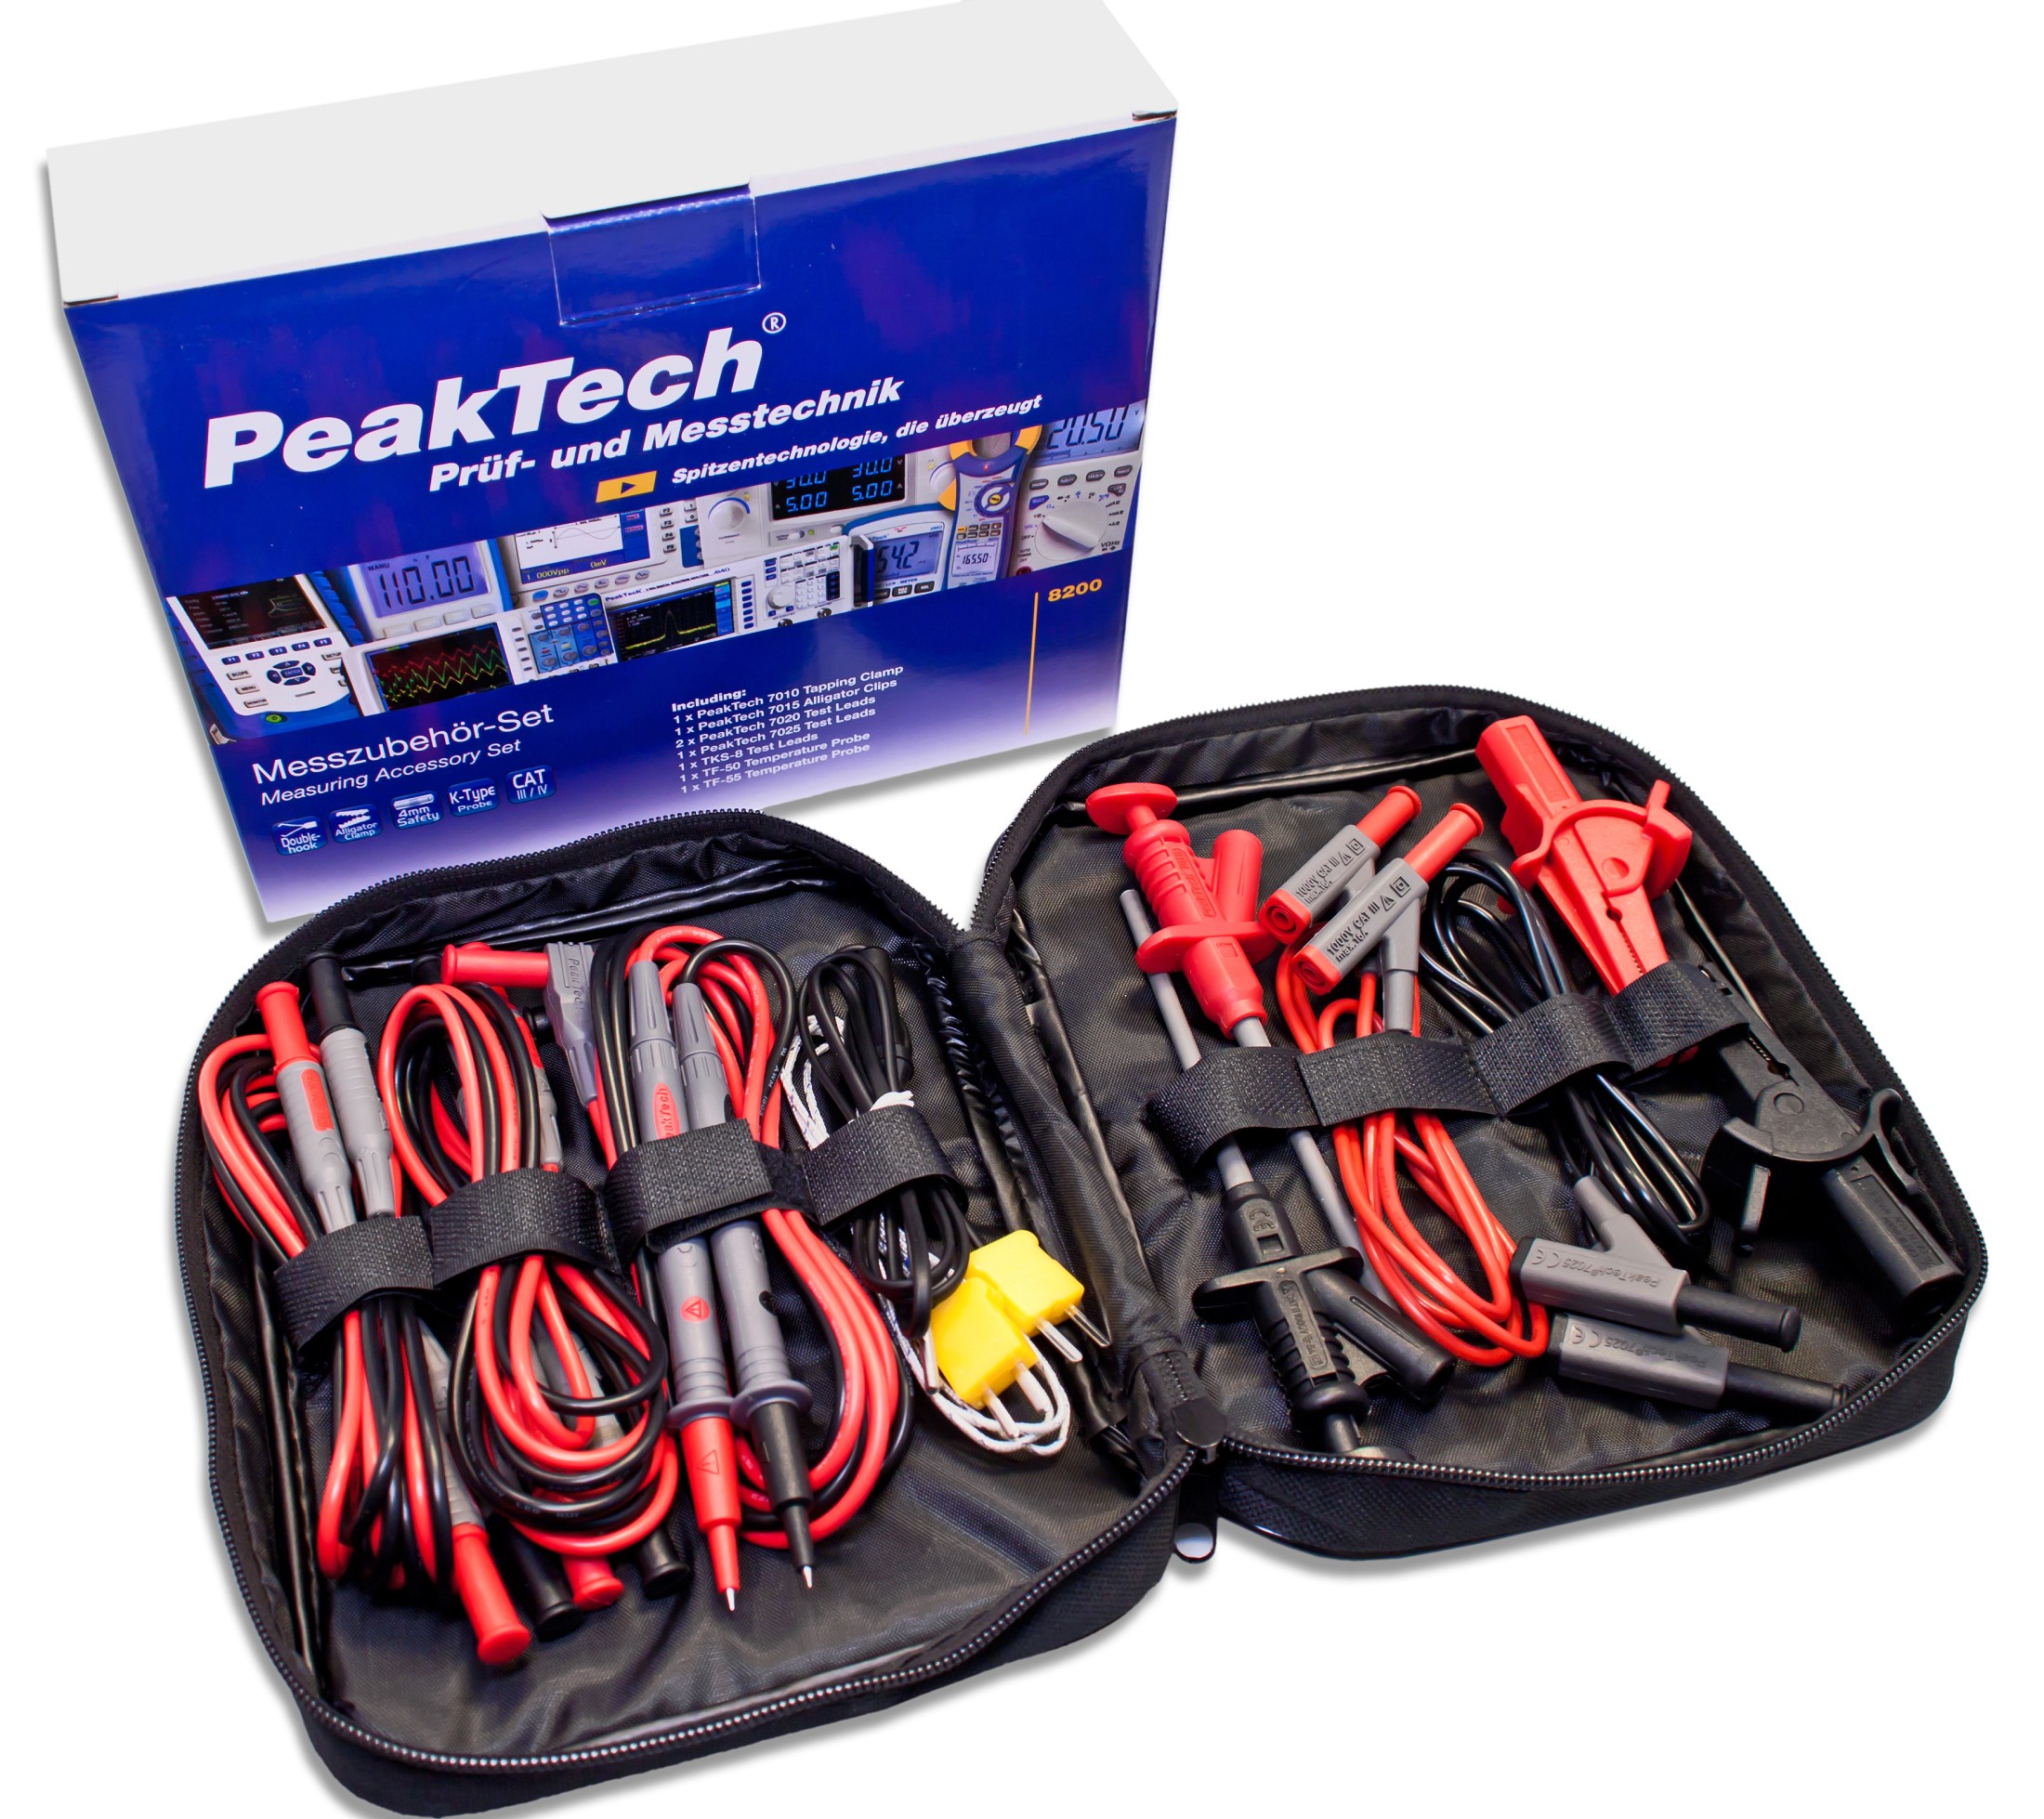 «PeakTech® P 8200» Measuring Accessories Set